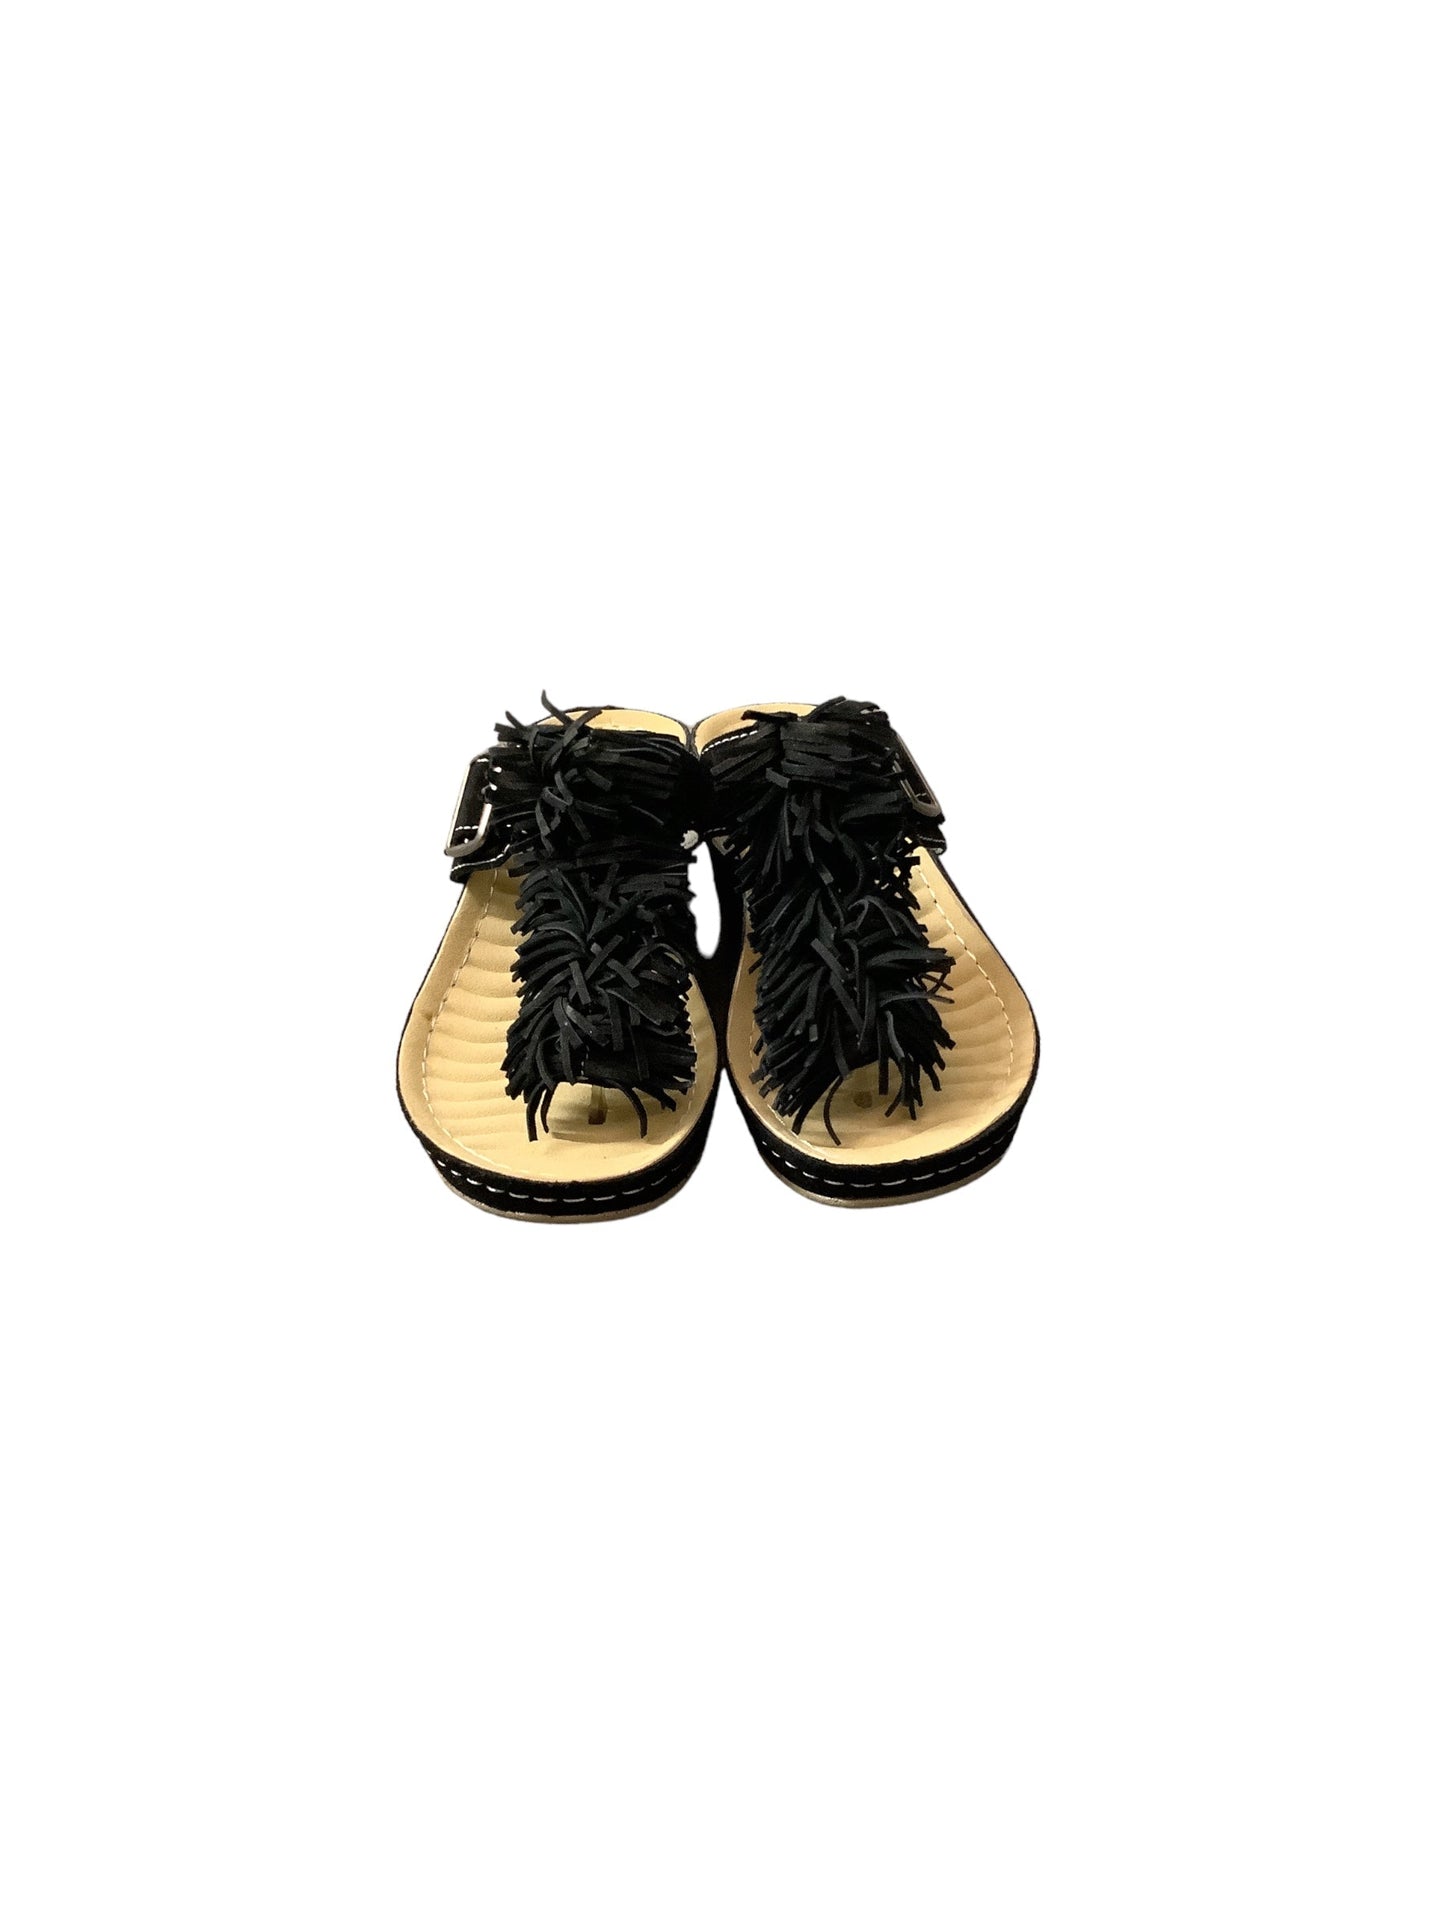 Black Sandals Heels Wedge Clothes Mentor, Size 7